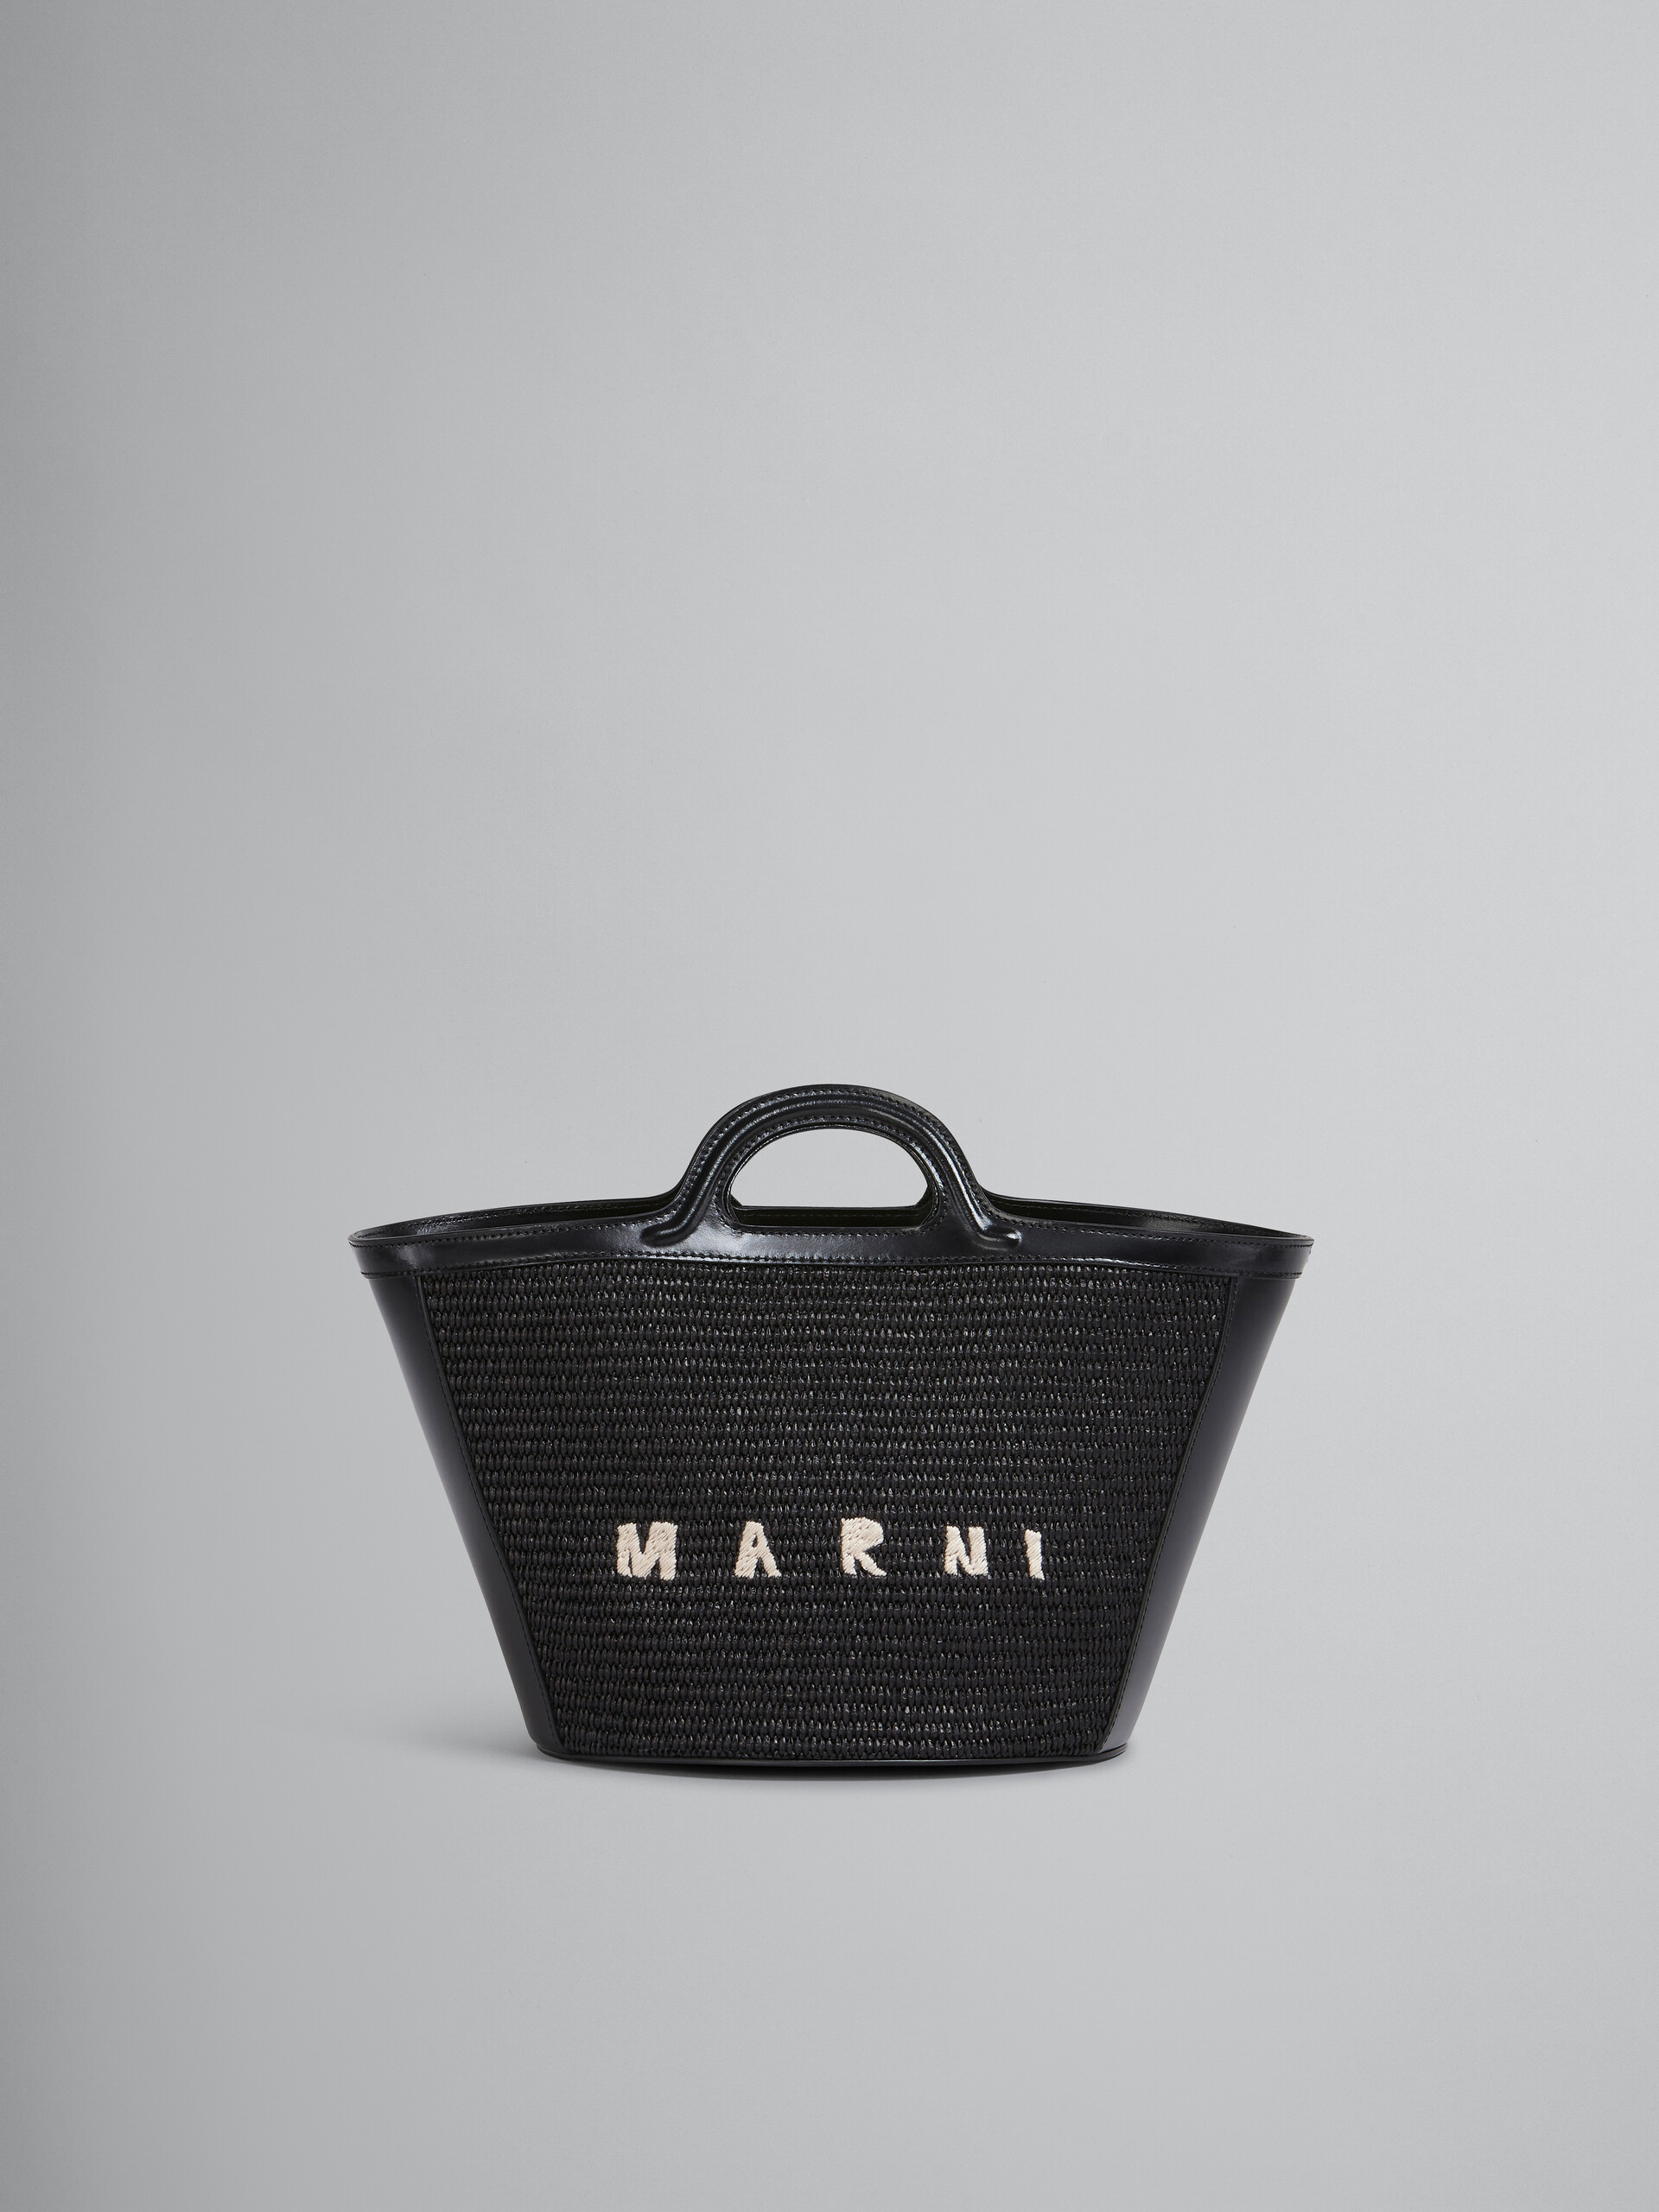 Tropicalia Small Bag in light blue leather and raffia-effect fabric - Handbags - Image 1